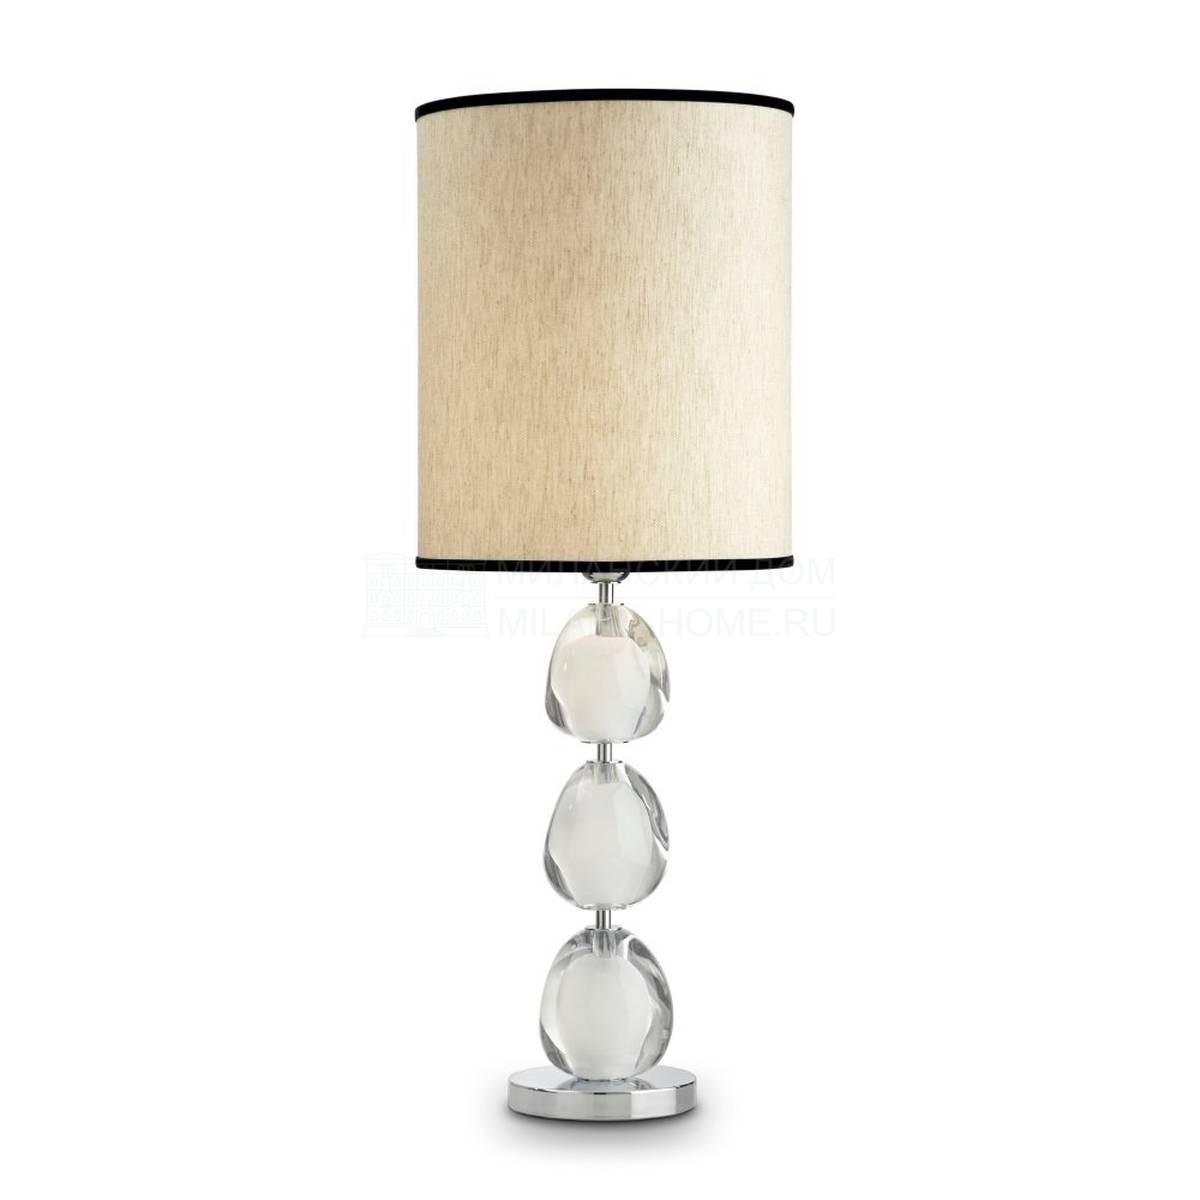 Настольная лампа Echo table lamp with shade из Италии фабрики MARIONI